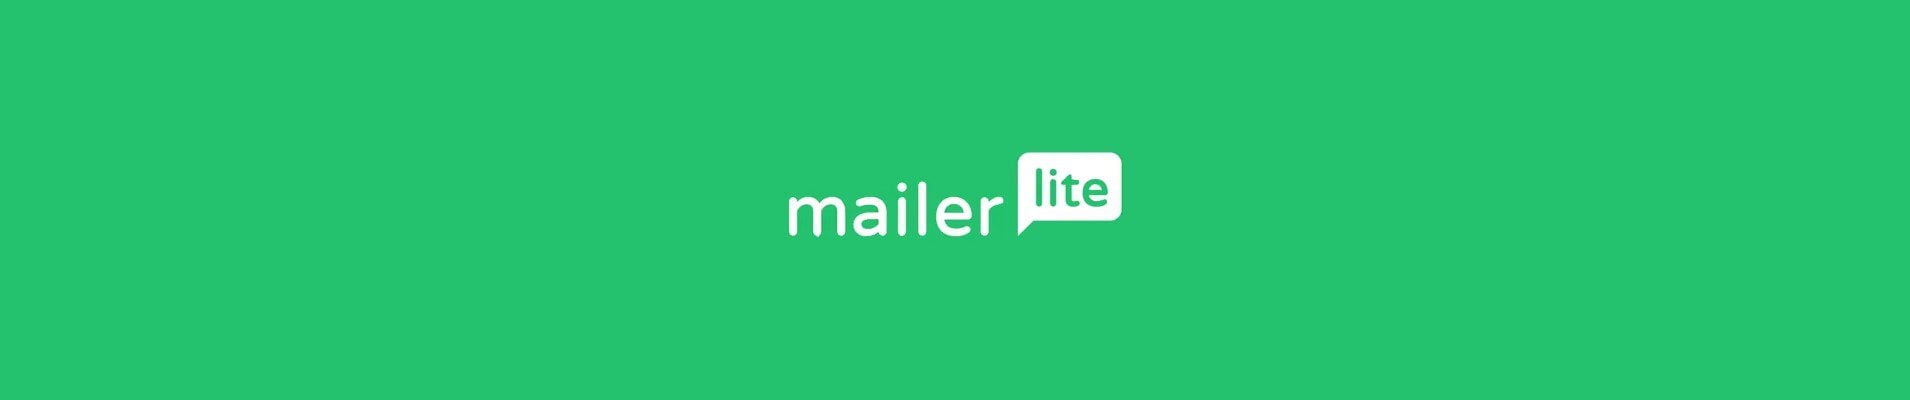 MailerLite ロゴマーク